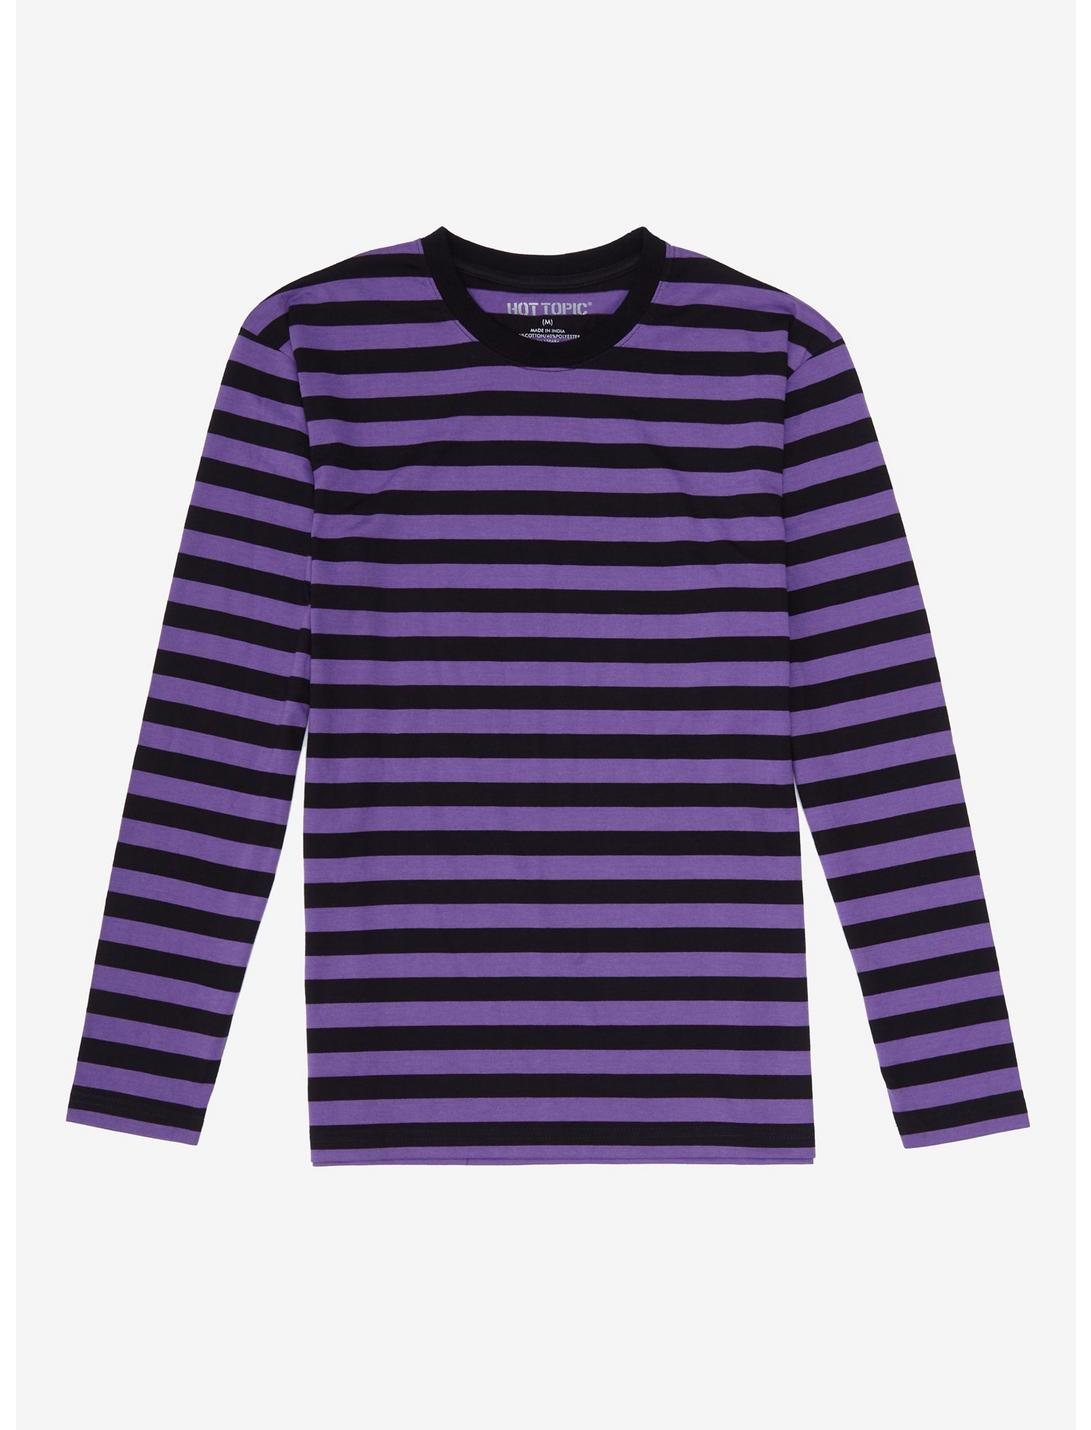 Purple & Black Stripe Long-Sleeve T-Shirt, STRIPE - PURPLE, hi-res